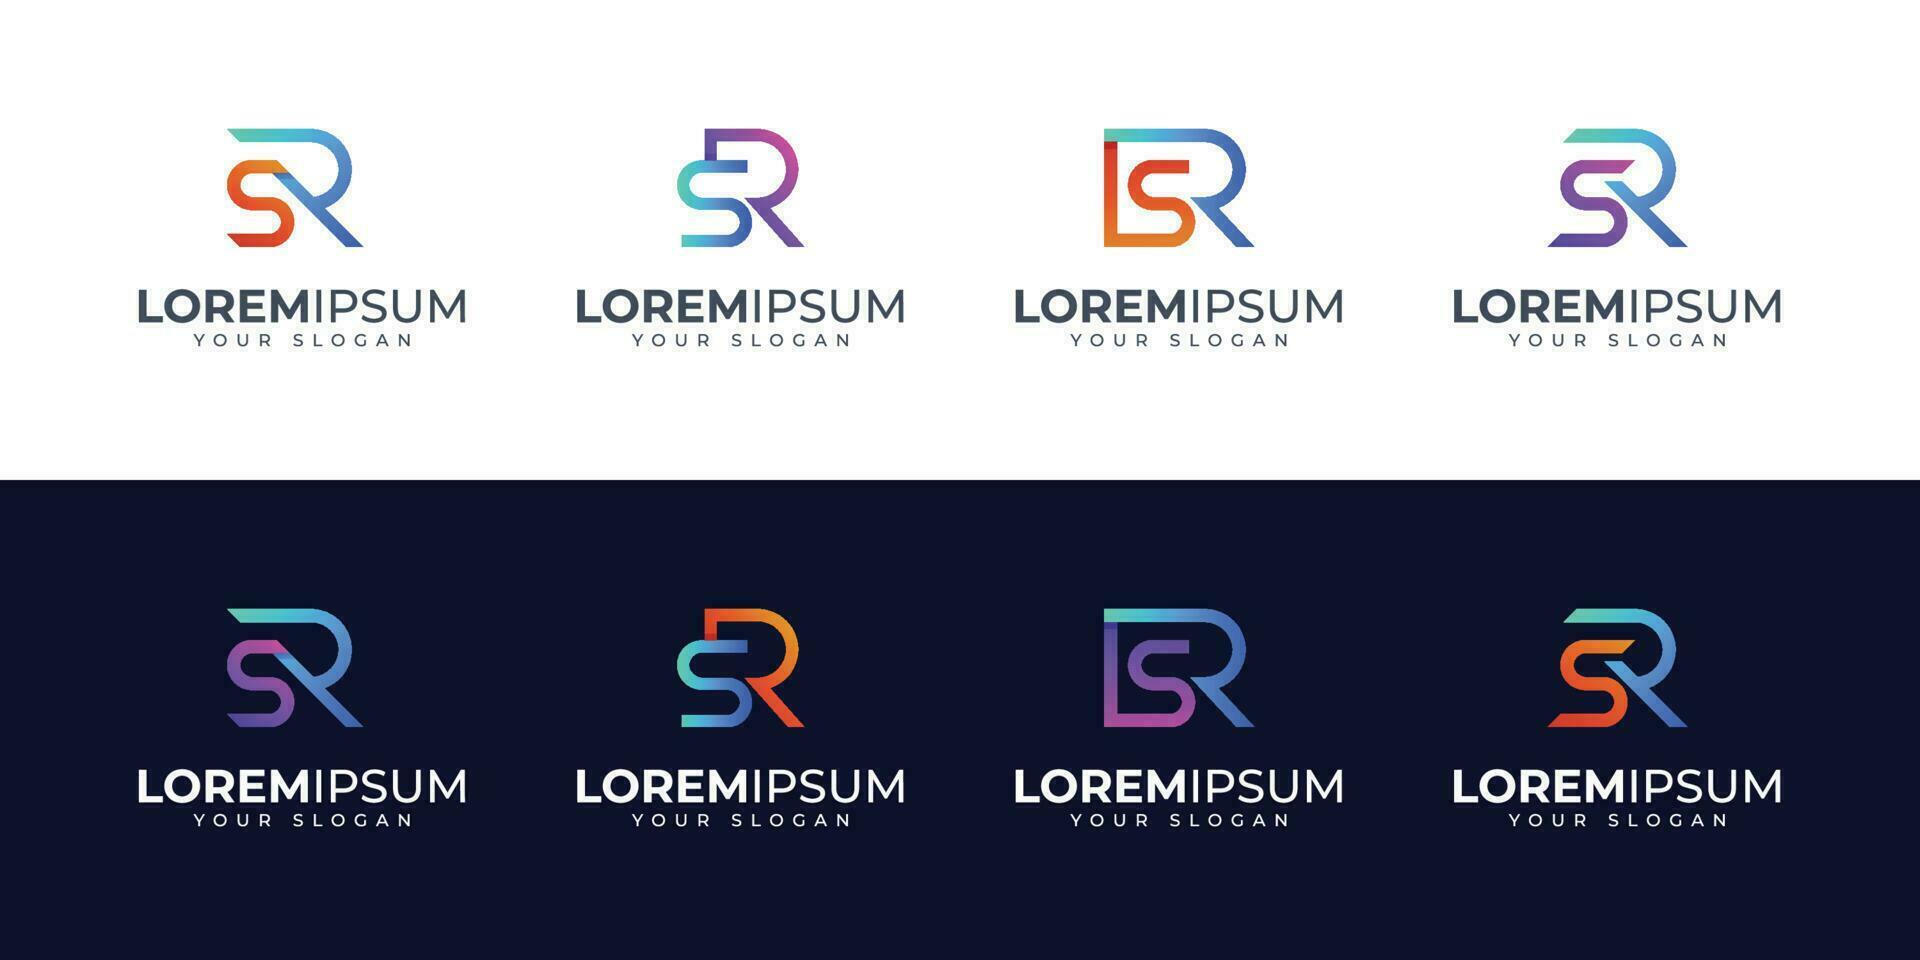 Inspiration für das Design des Monogramm-SR-Logos. s r. rs-Logo vektor